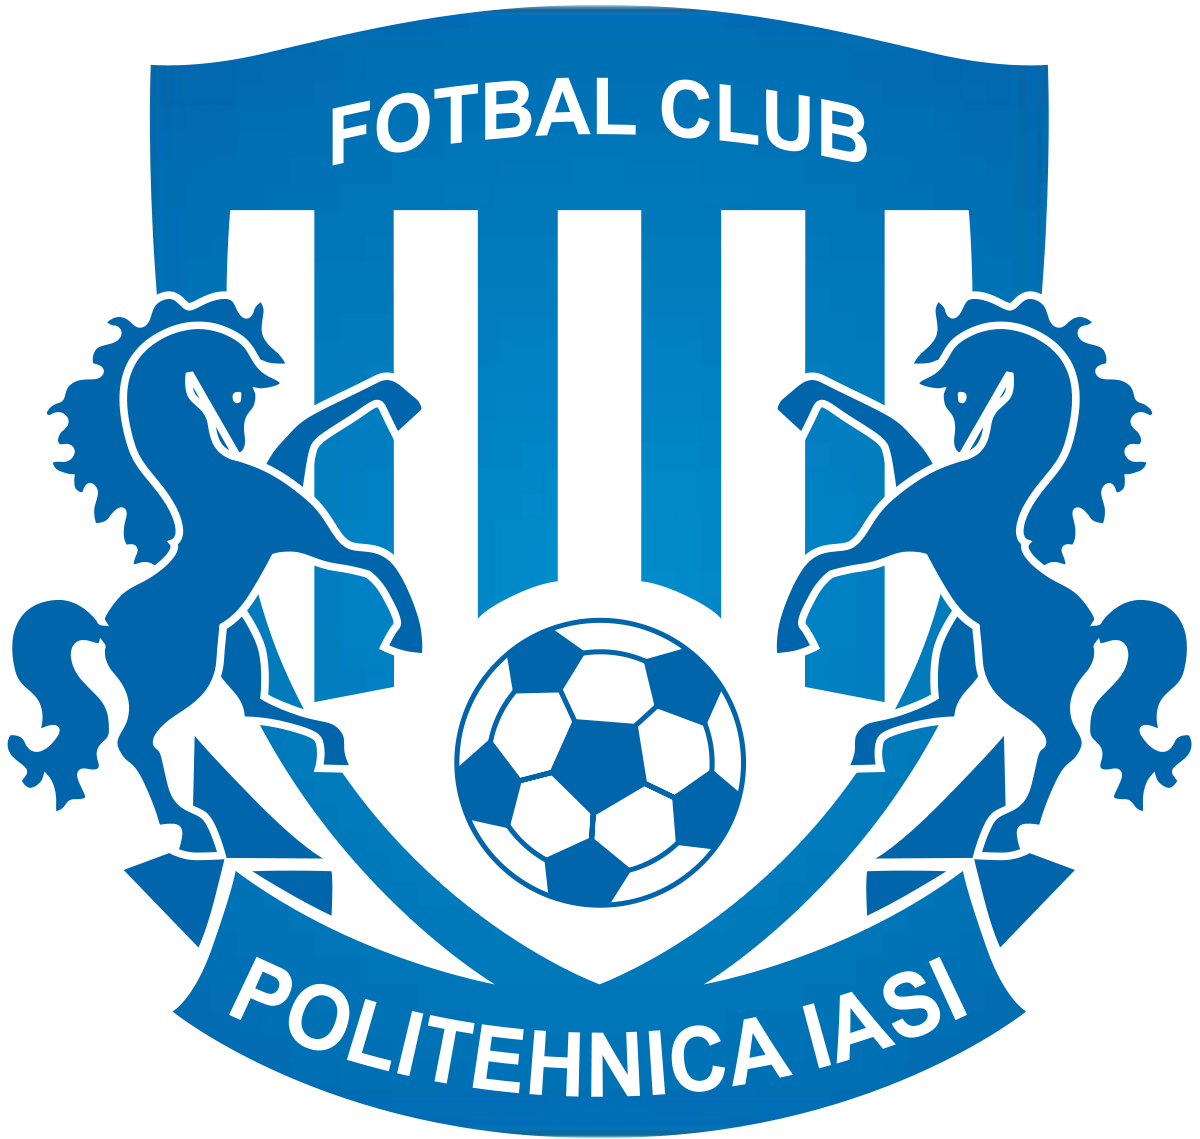 Politehnica Iasi logo